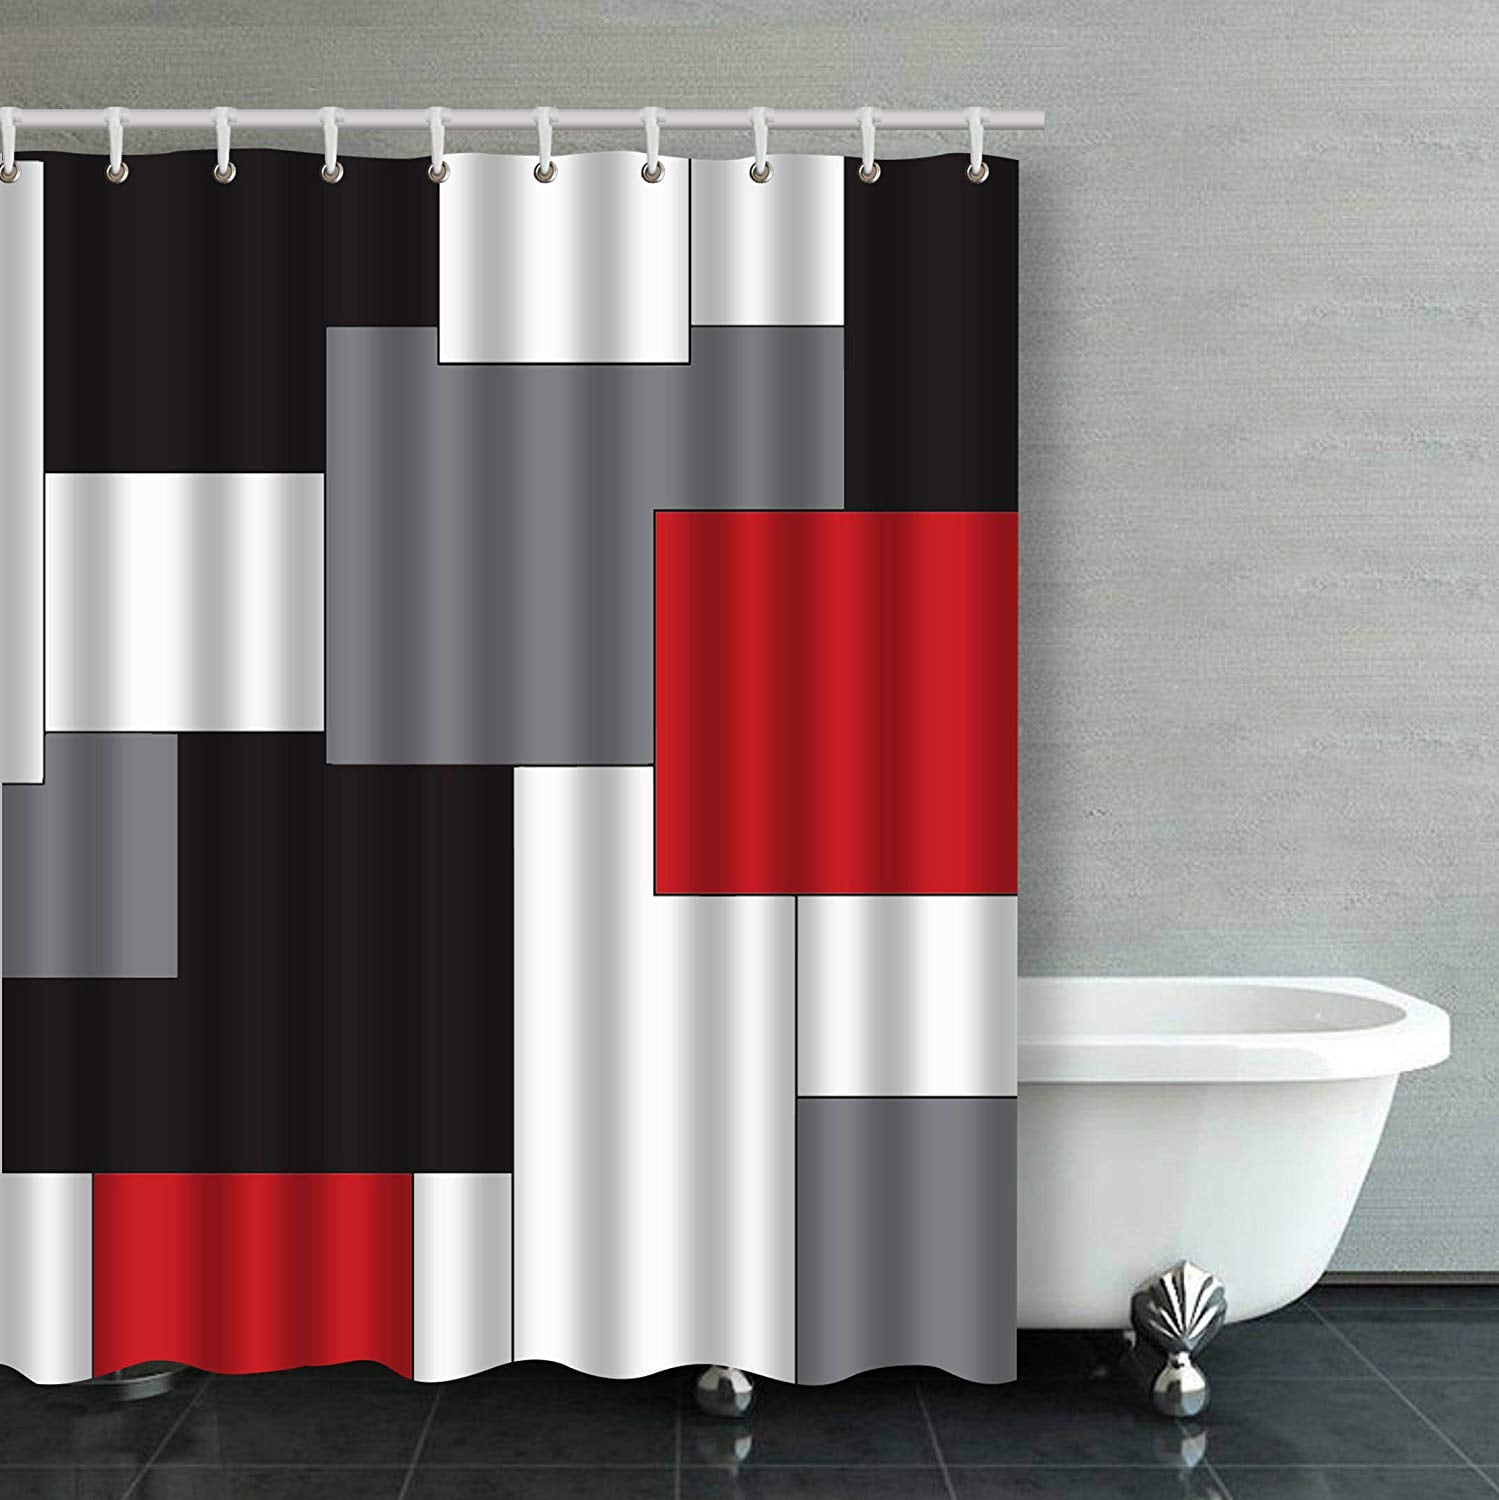 Inspirational Quotes Black White Shower Curtain Sets Funny Slang Bathroom Decor 